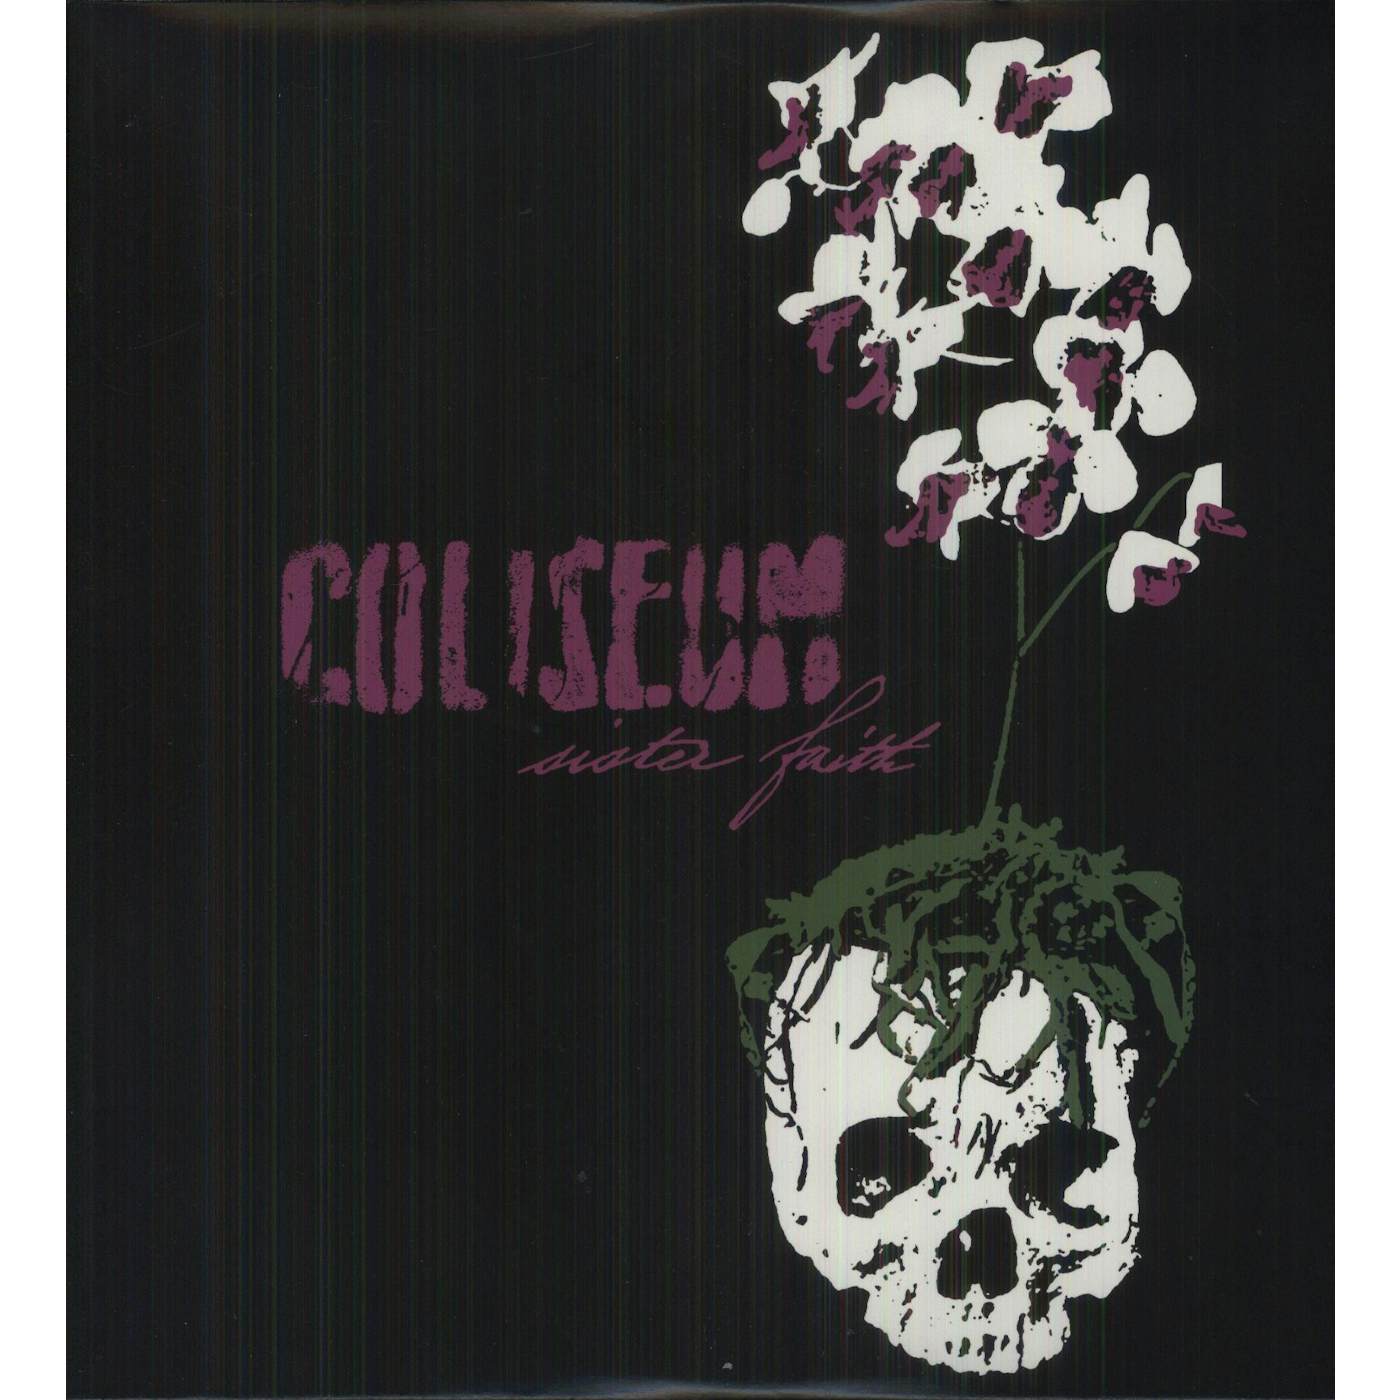 Coliseum Sister Faith Vinyl Record